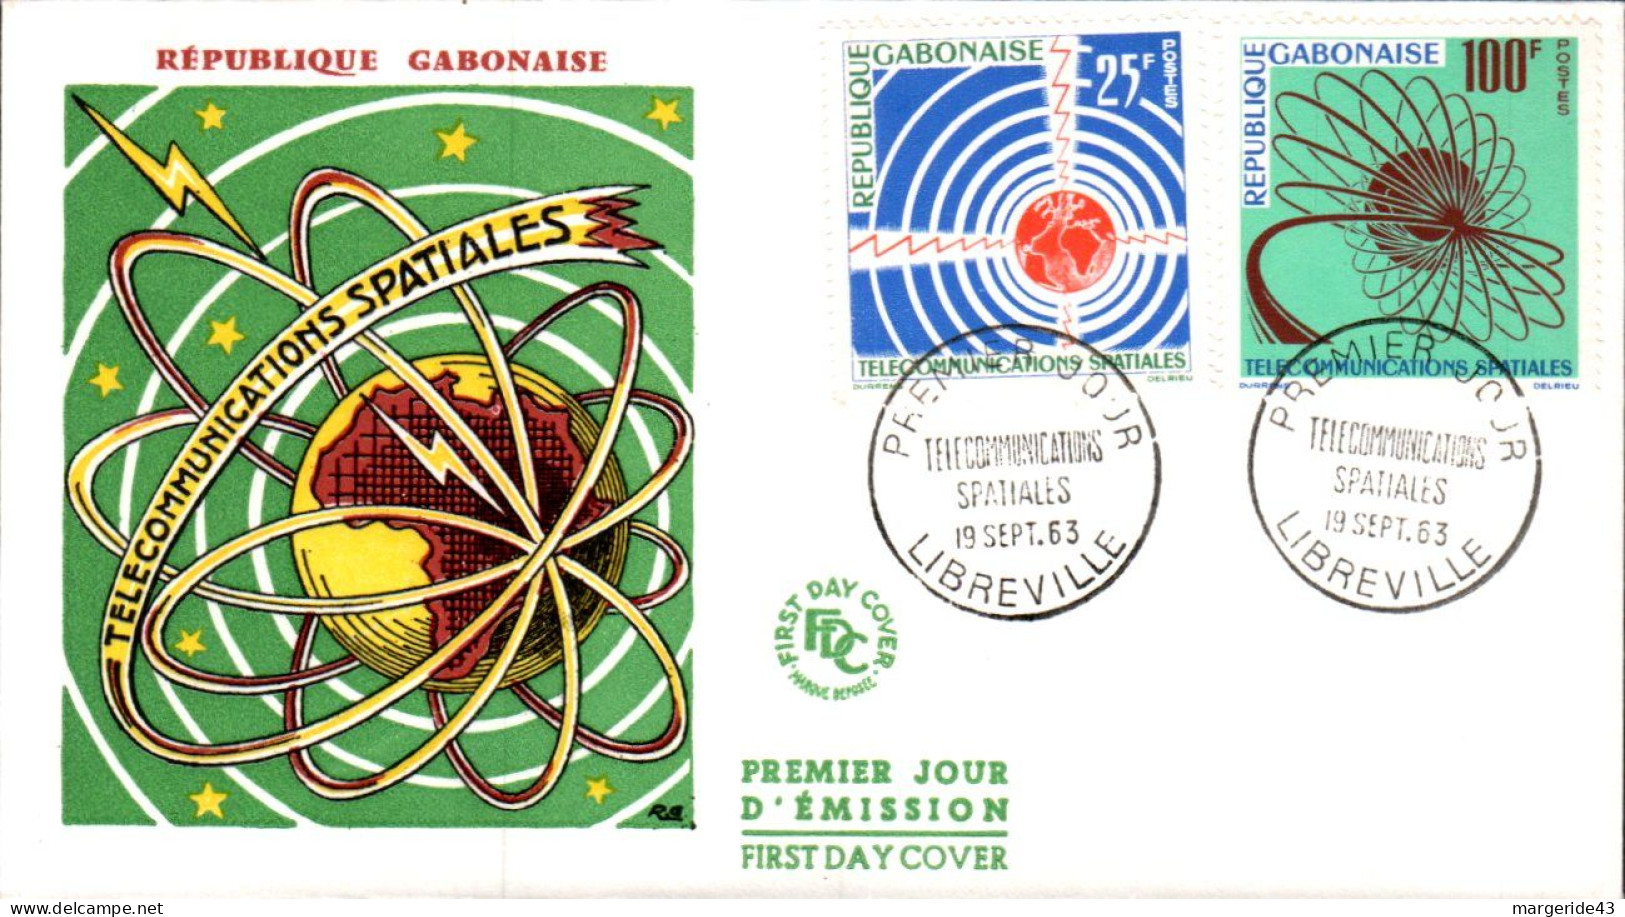 GABON FDC 1963 TELECOMMUNICATIONS SPATIALES - Gabon (1960-...)